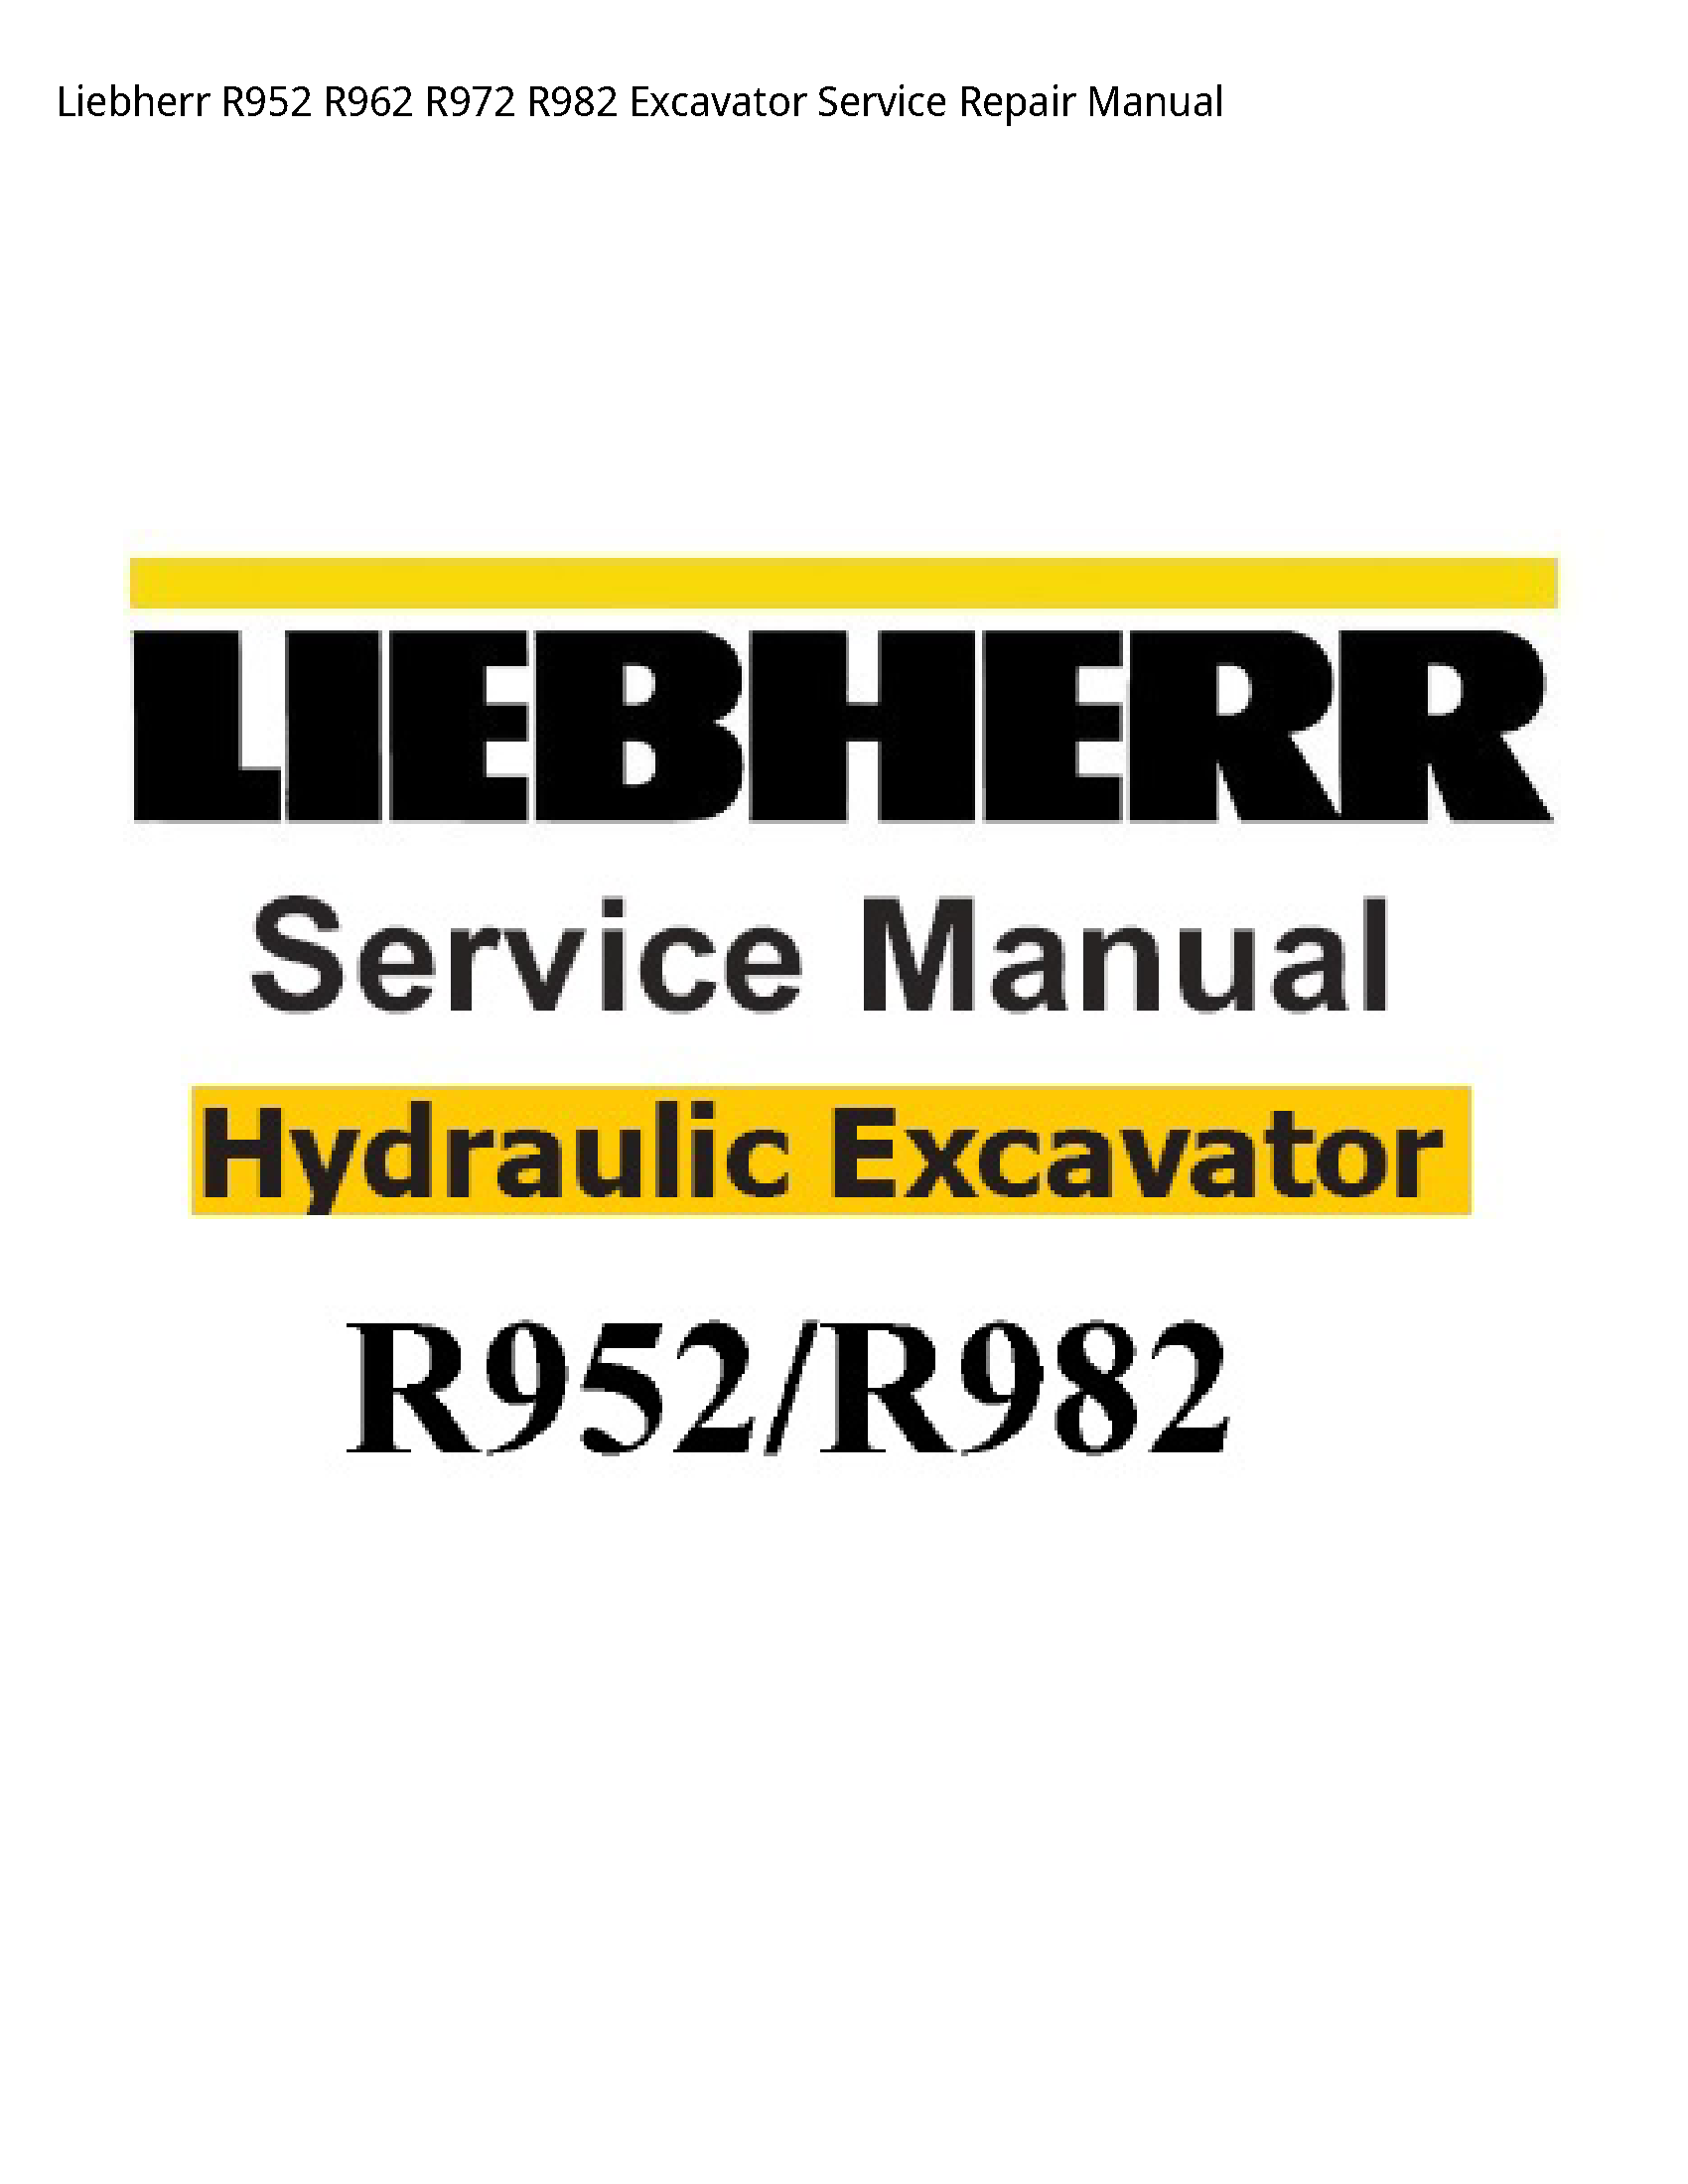 Liebherr R952 Excavator manual